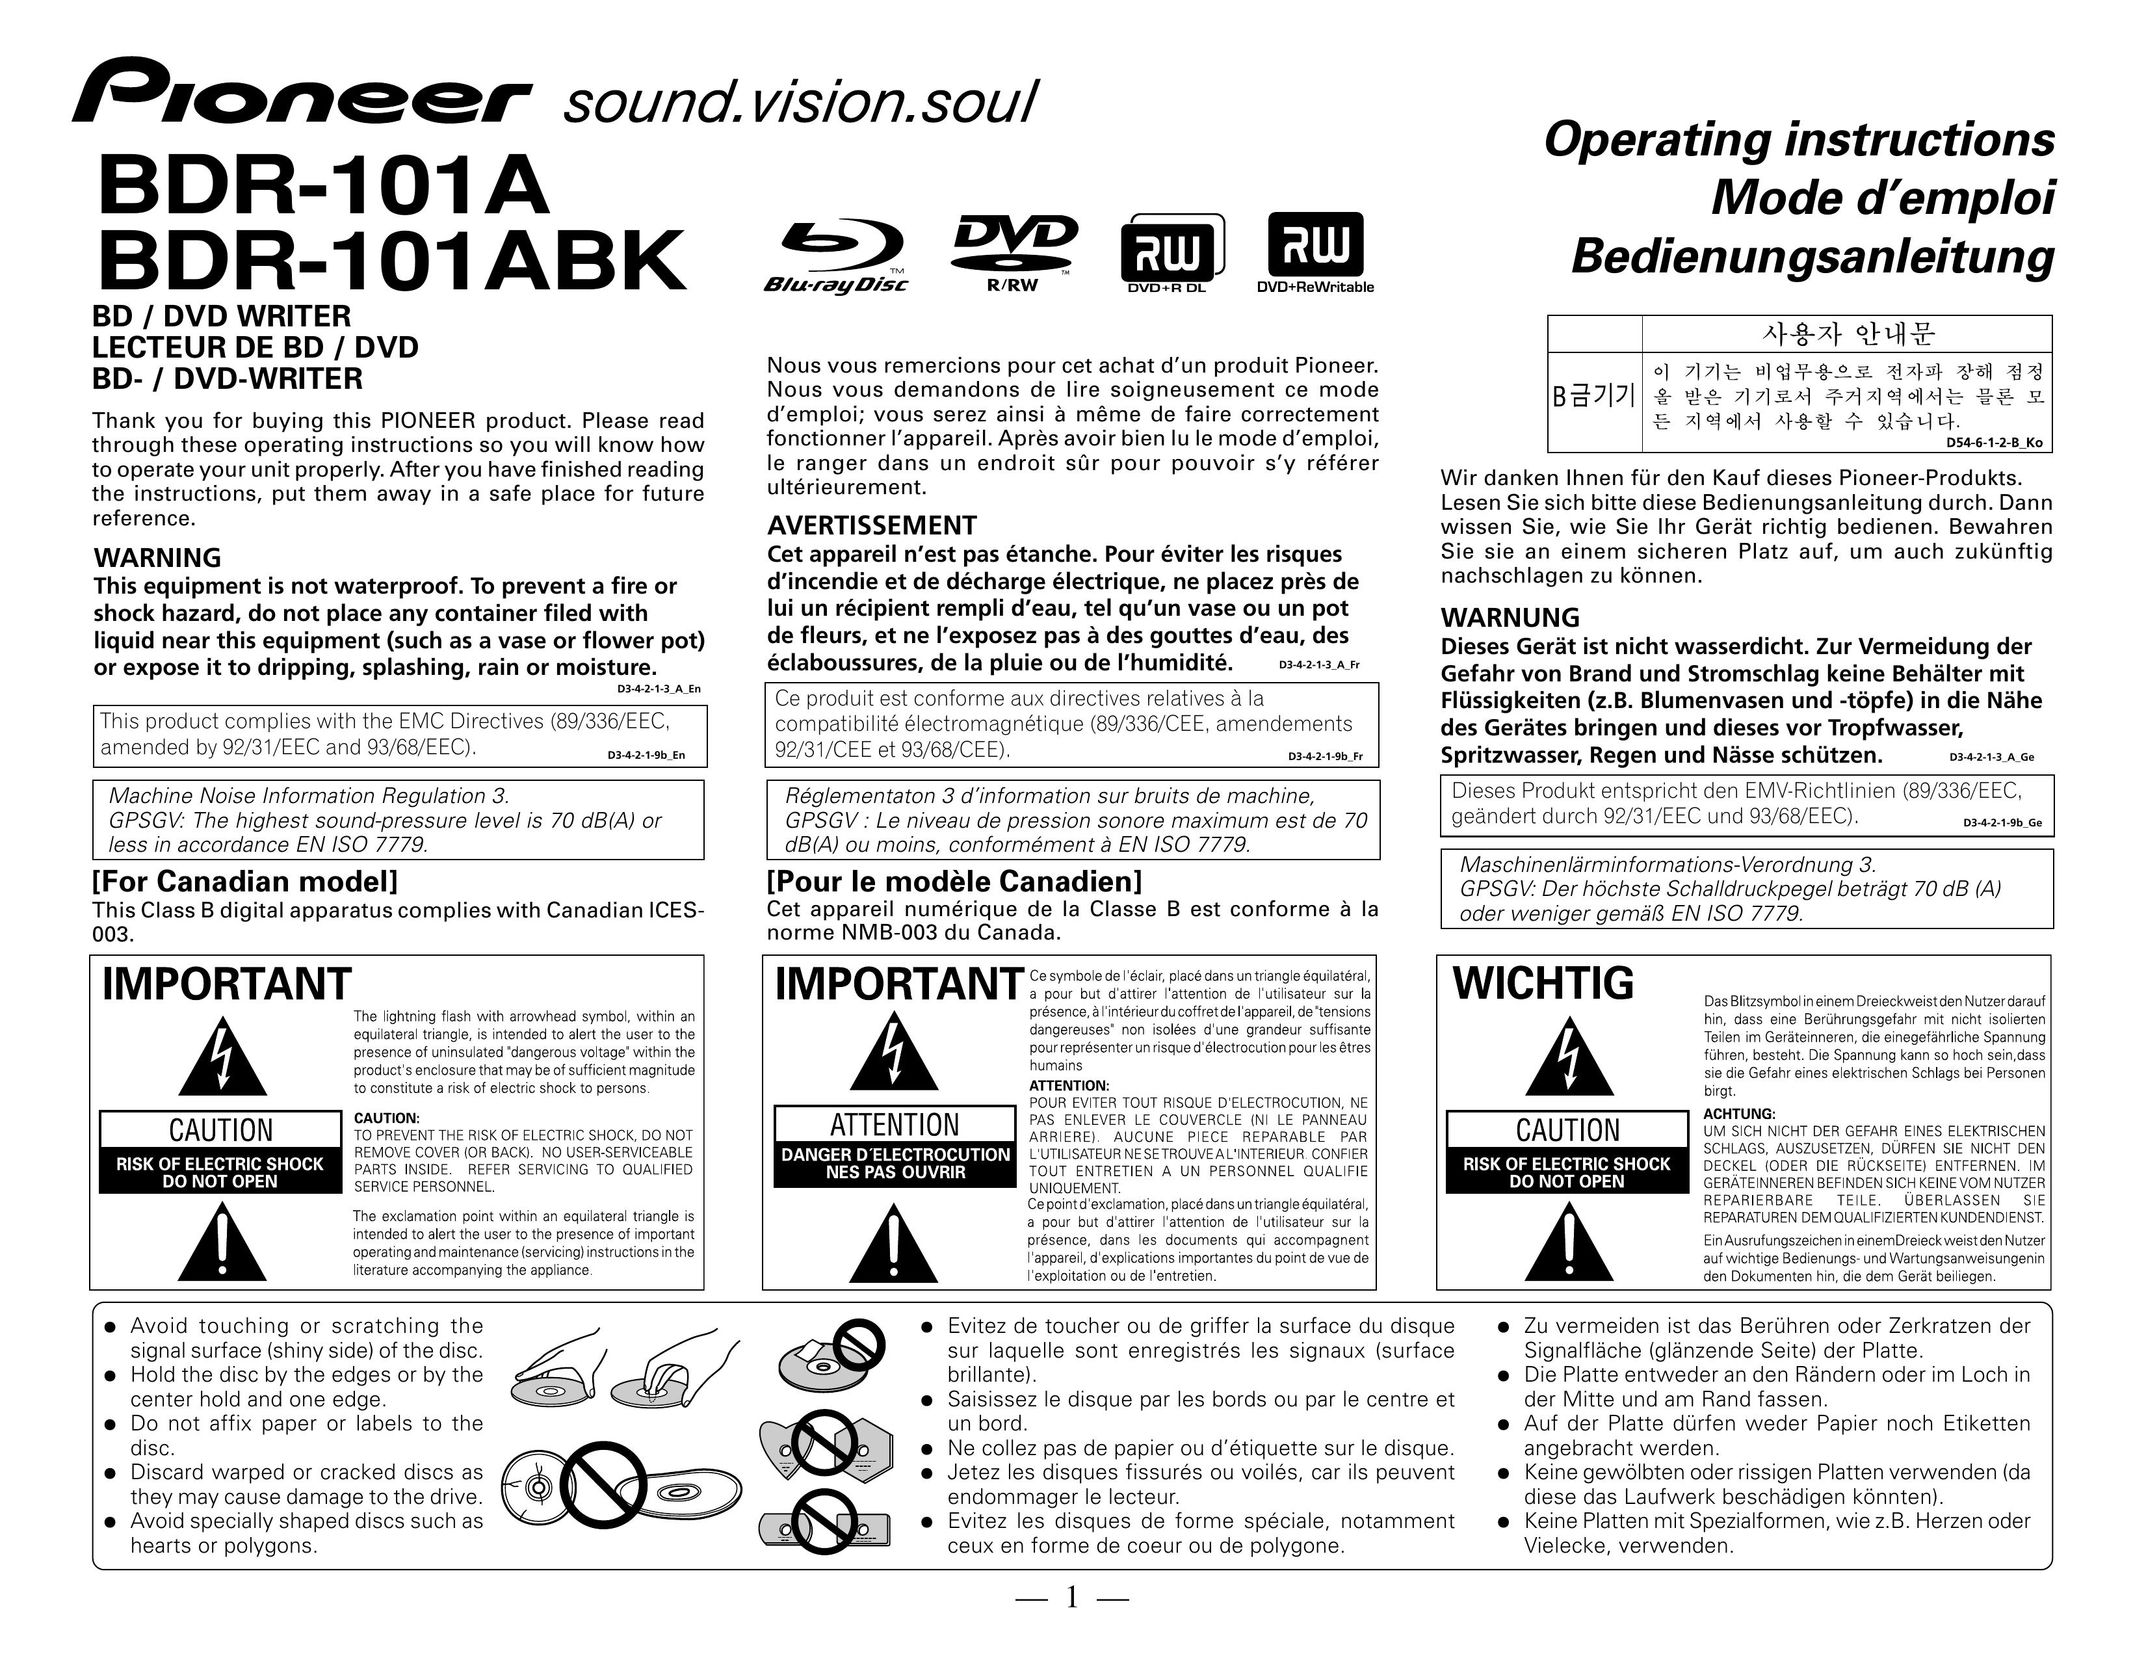 Pioneer BDR-101ABK DVD Recorder User Manual